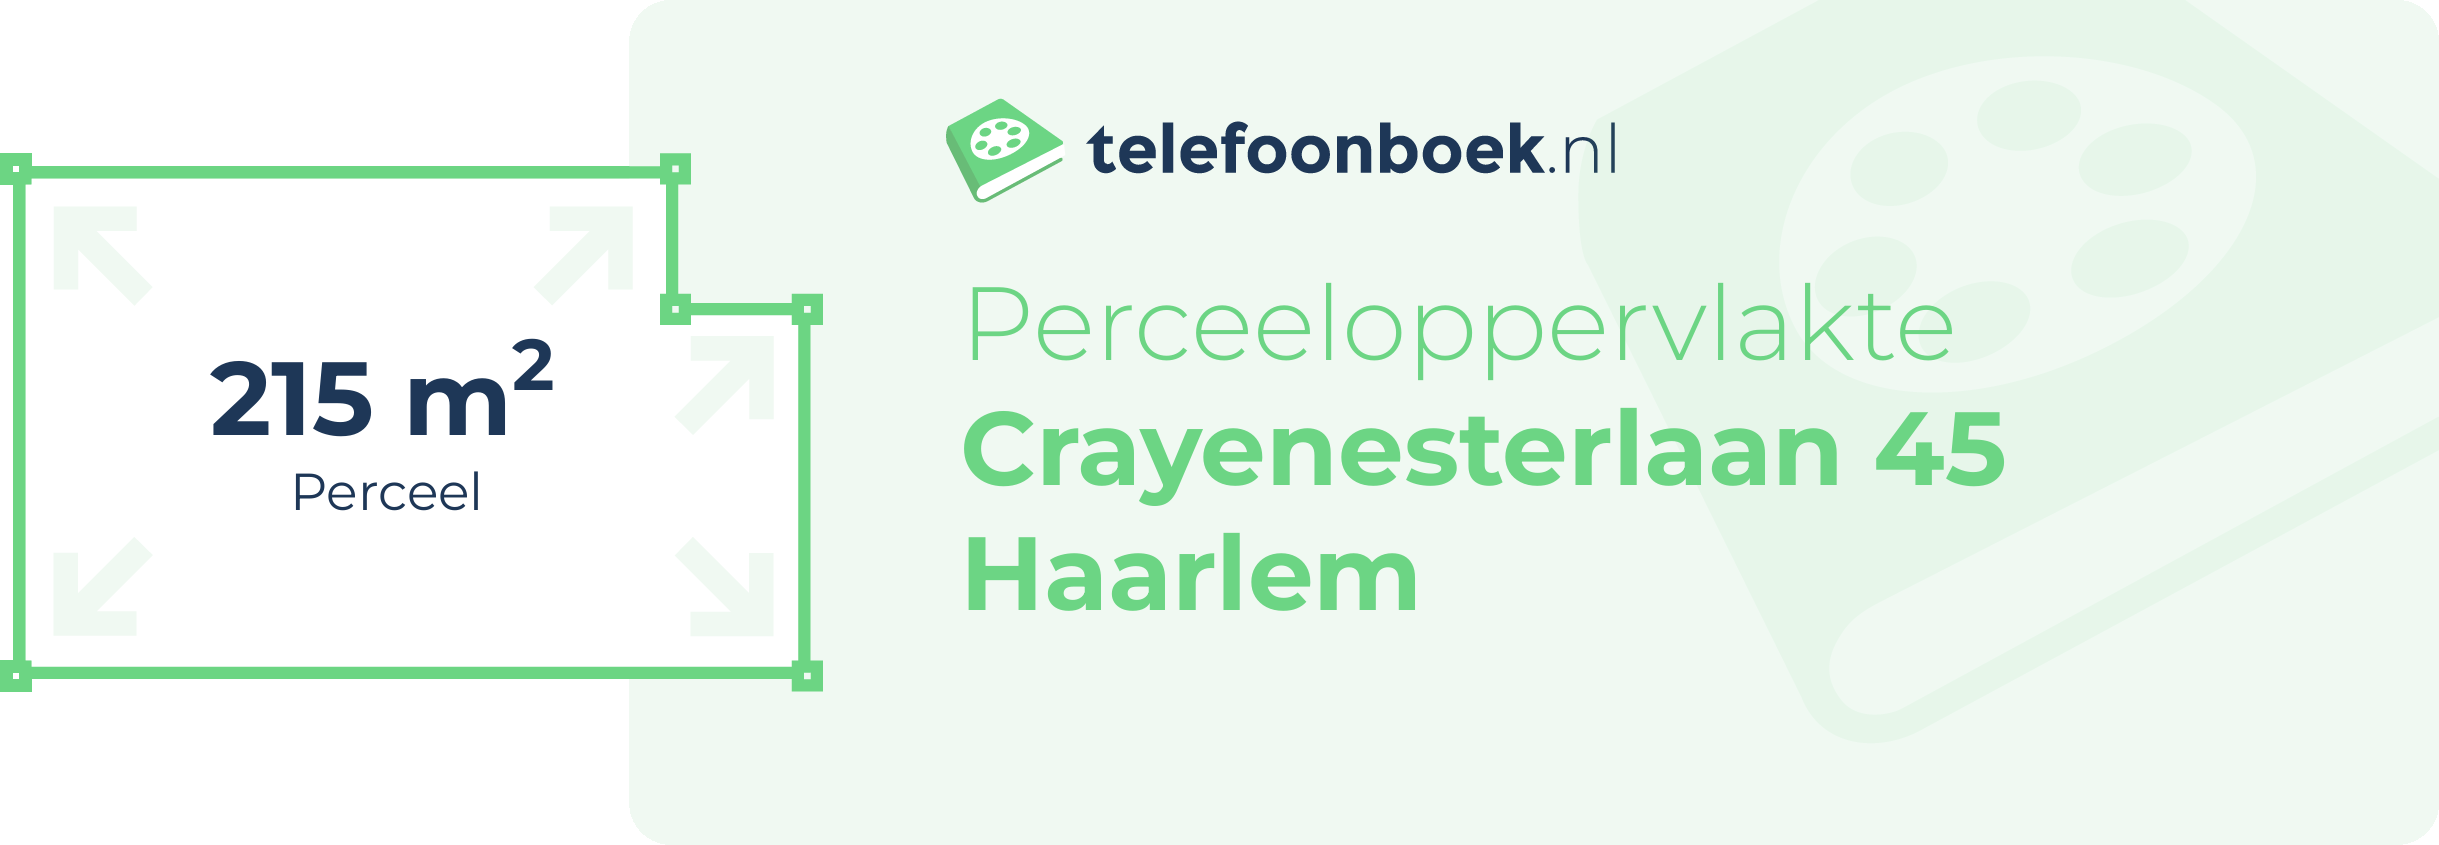 Perceeloppervlakte Crayenesterlaan 45 Haarlem